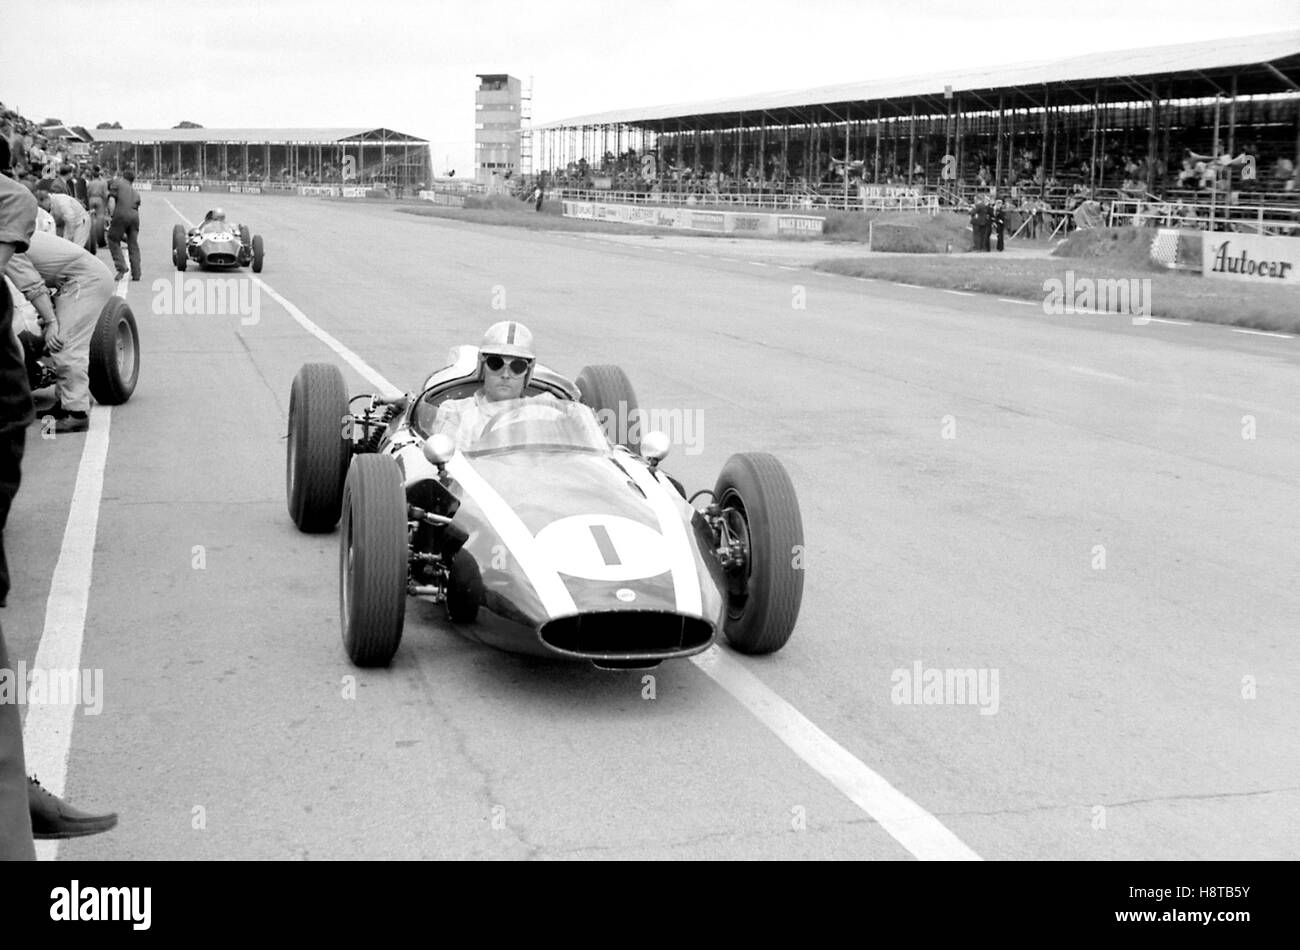 Image of Brabham F1 mechanics in the Monza pits, 1969, Italian GP